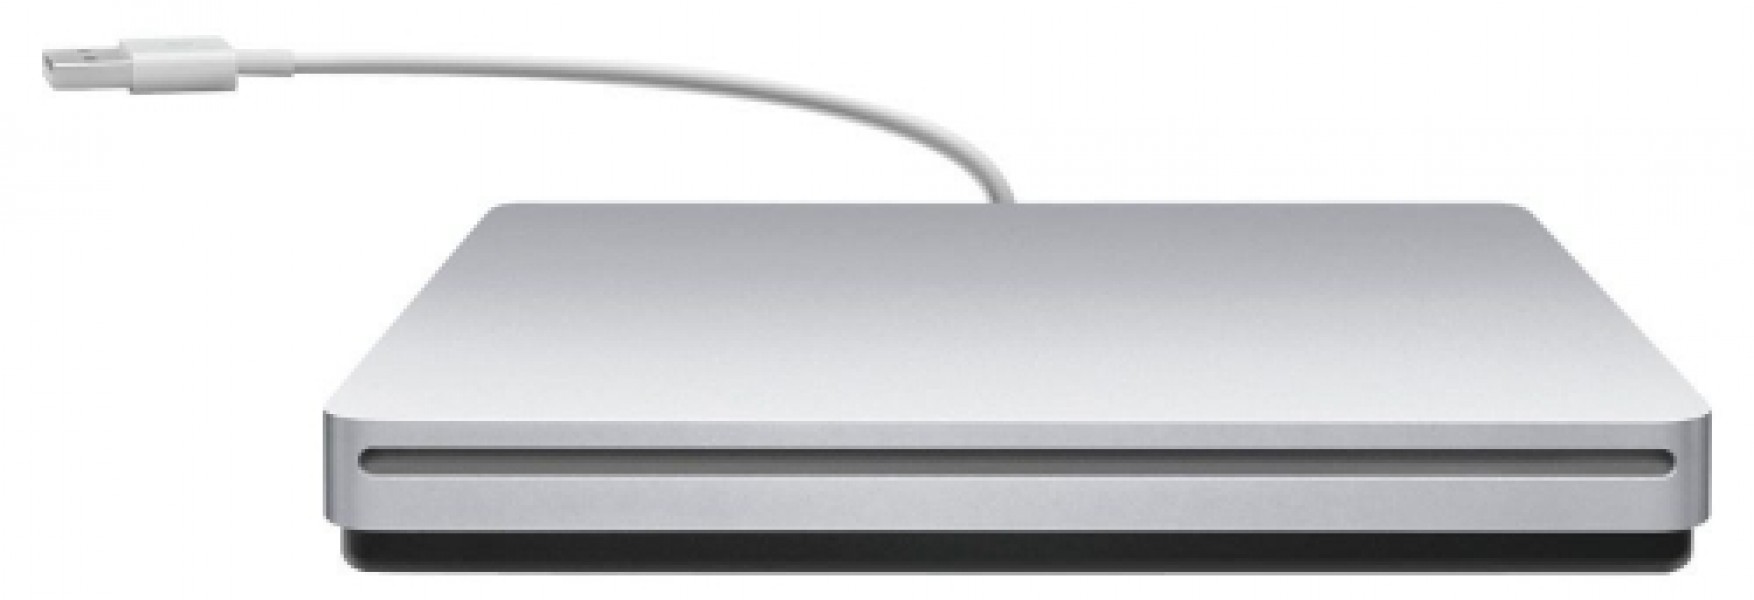 Apple USB SuperDrive (NEW)